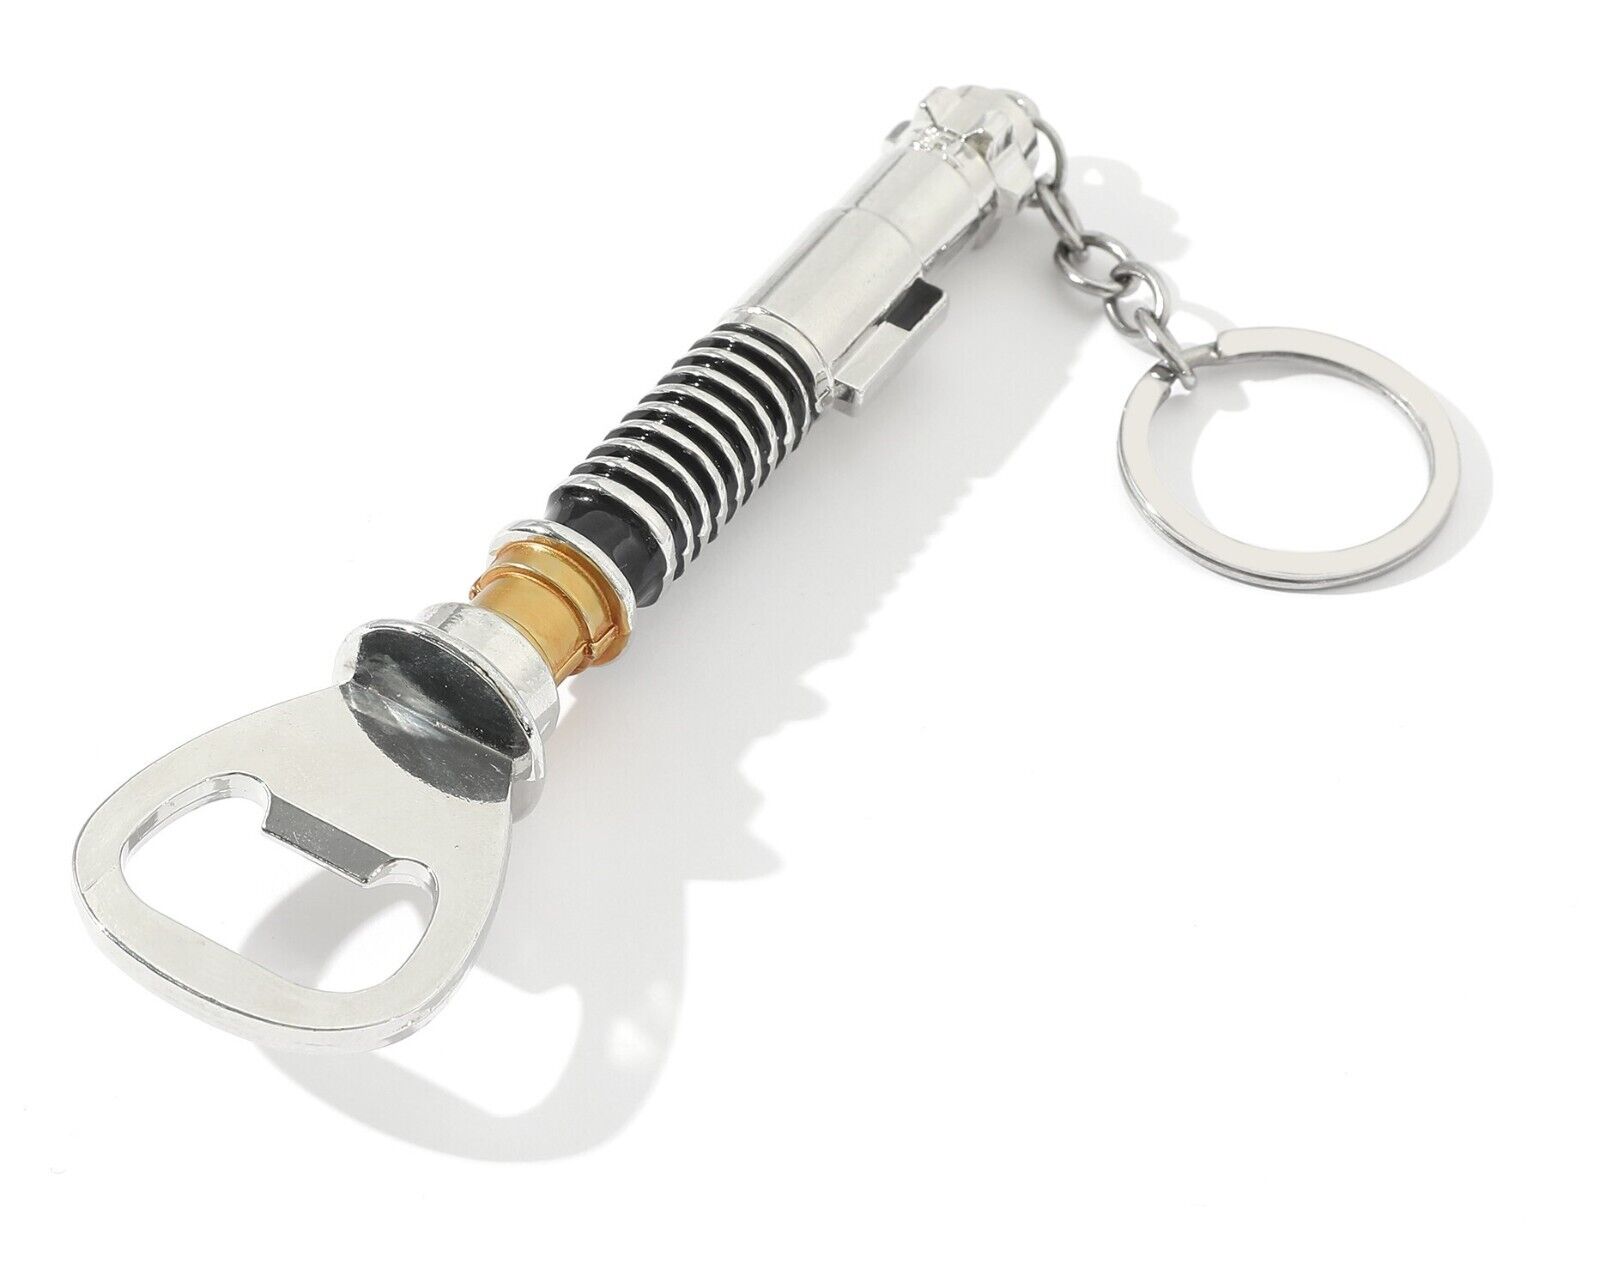 Lightsaber Bottle opener Luke style Key Chain Bottle Opener Jedi Sith Star Wars